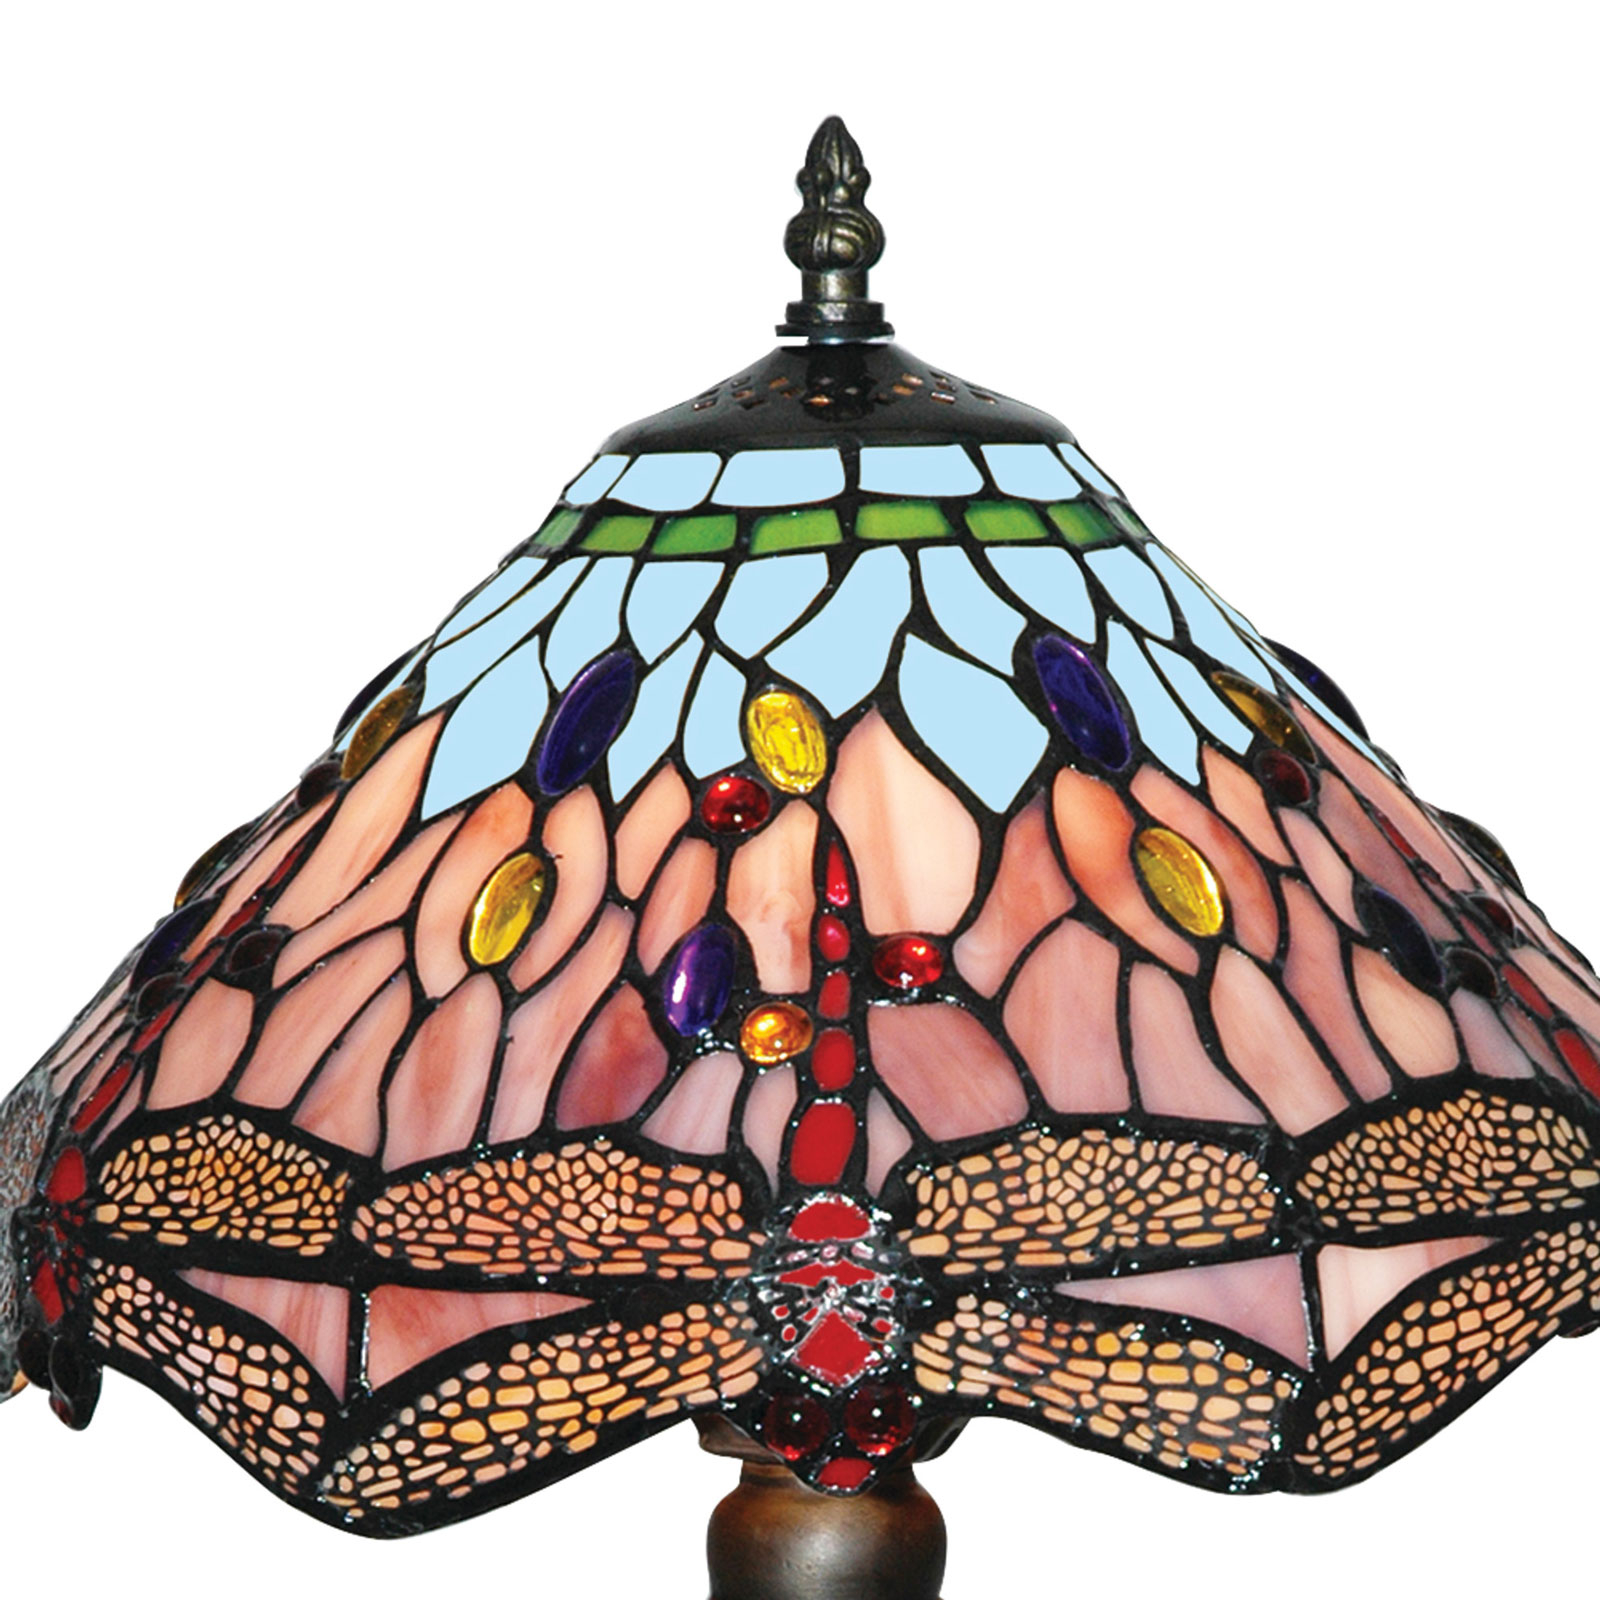 Enchanting Tiffany-style Dragonfly table lamp